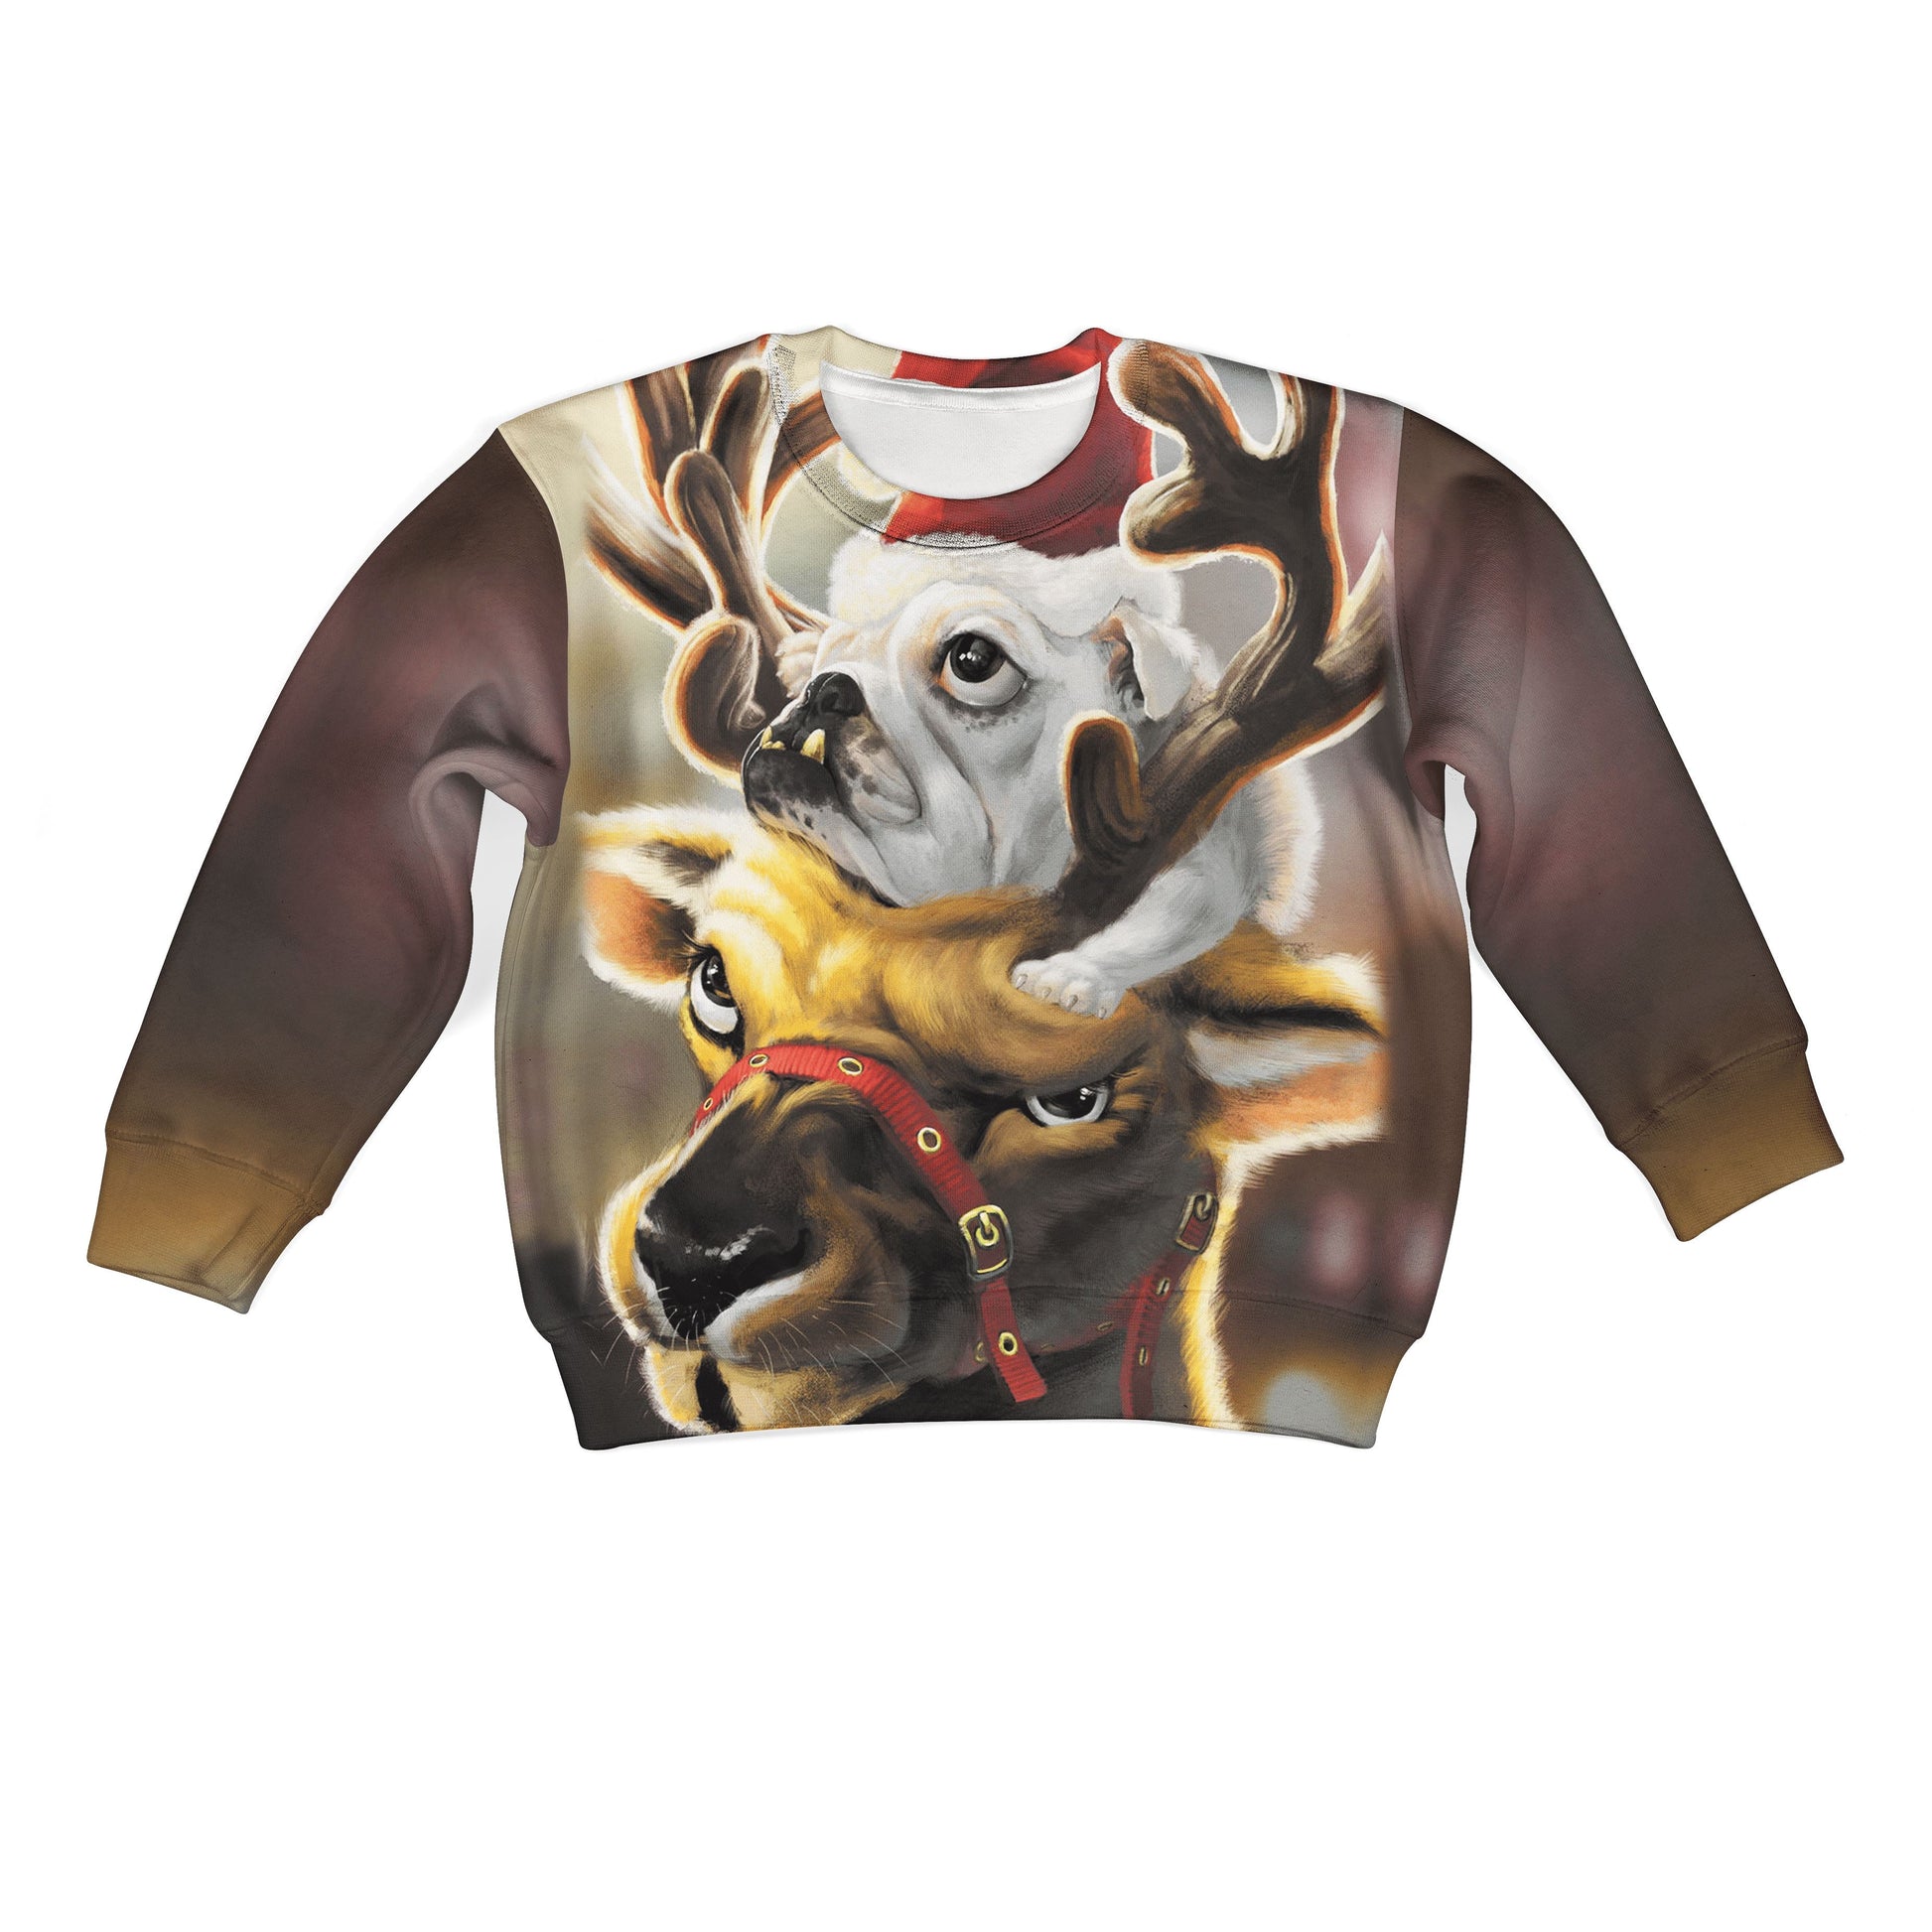 Pull Dog Riding Reindeer On Christmas Custom Hoodies T-shirt Apparel HD-PET110195K kid 3D apparel Kid Sweatshirt S/6-8 